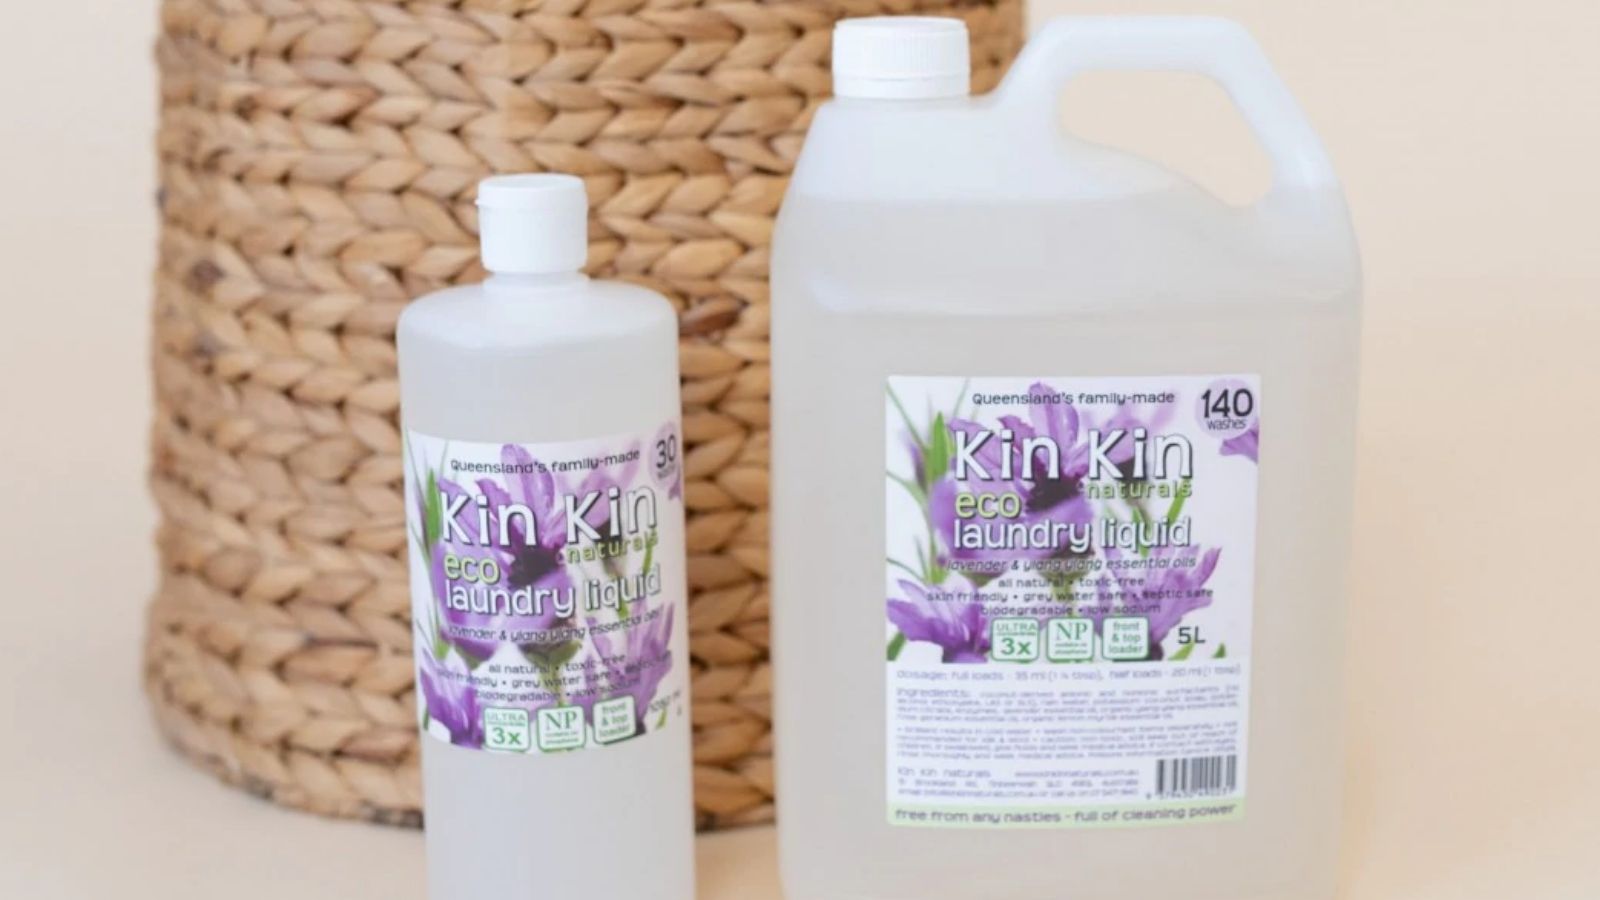 Image of bottles of  Kin Kin Laundry Liquid